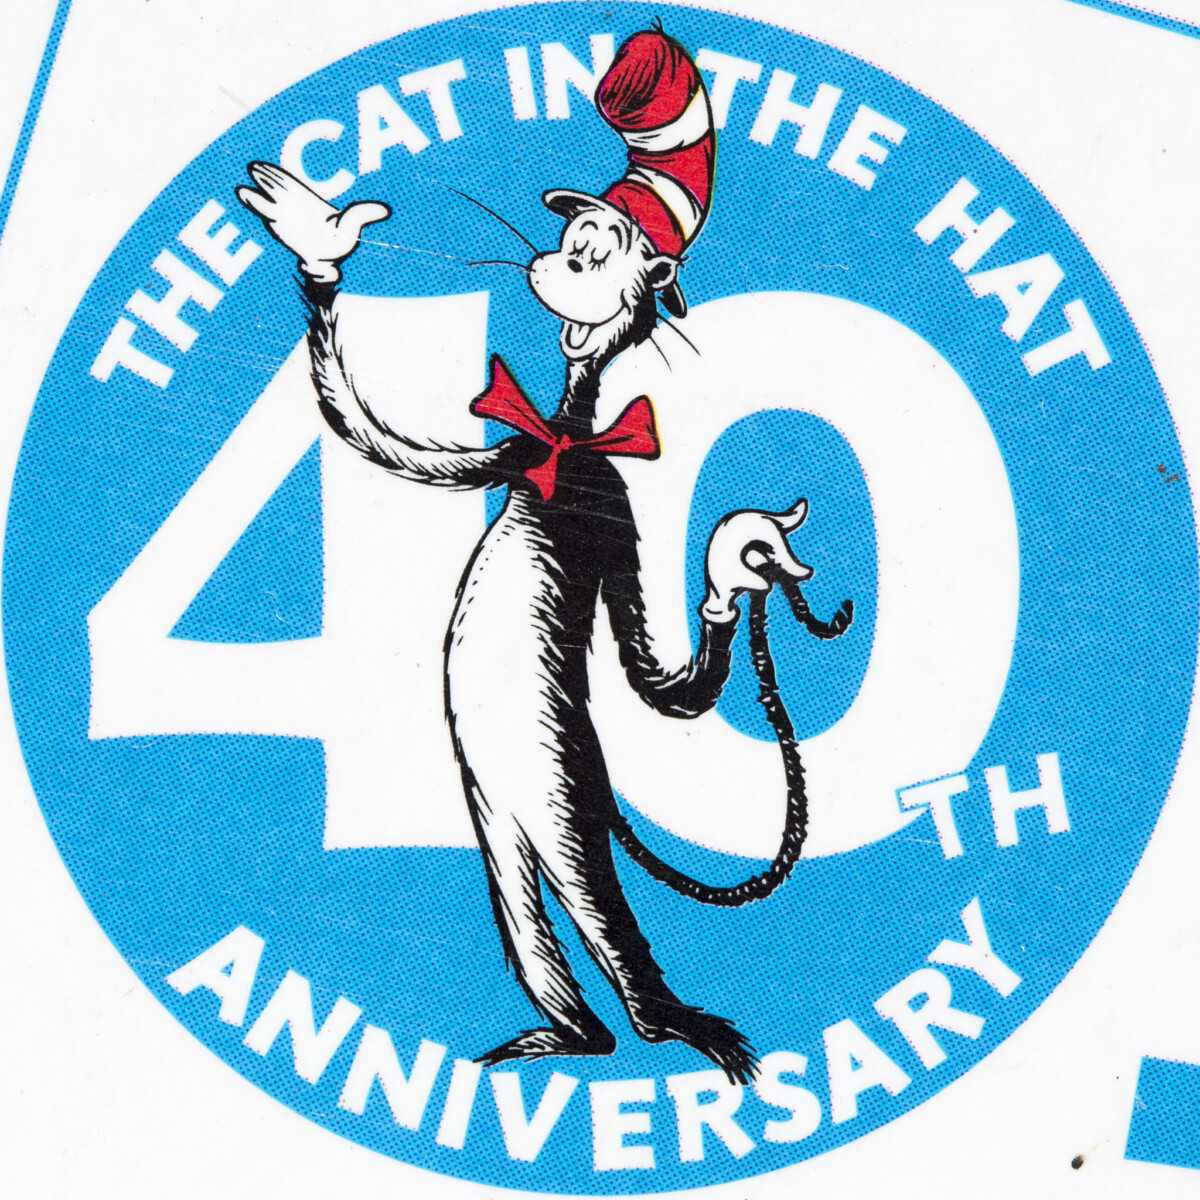 The Cat in the Hat 40th anniversary - logo roundel. Image: markmorgantrinidad n Flickr.com